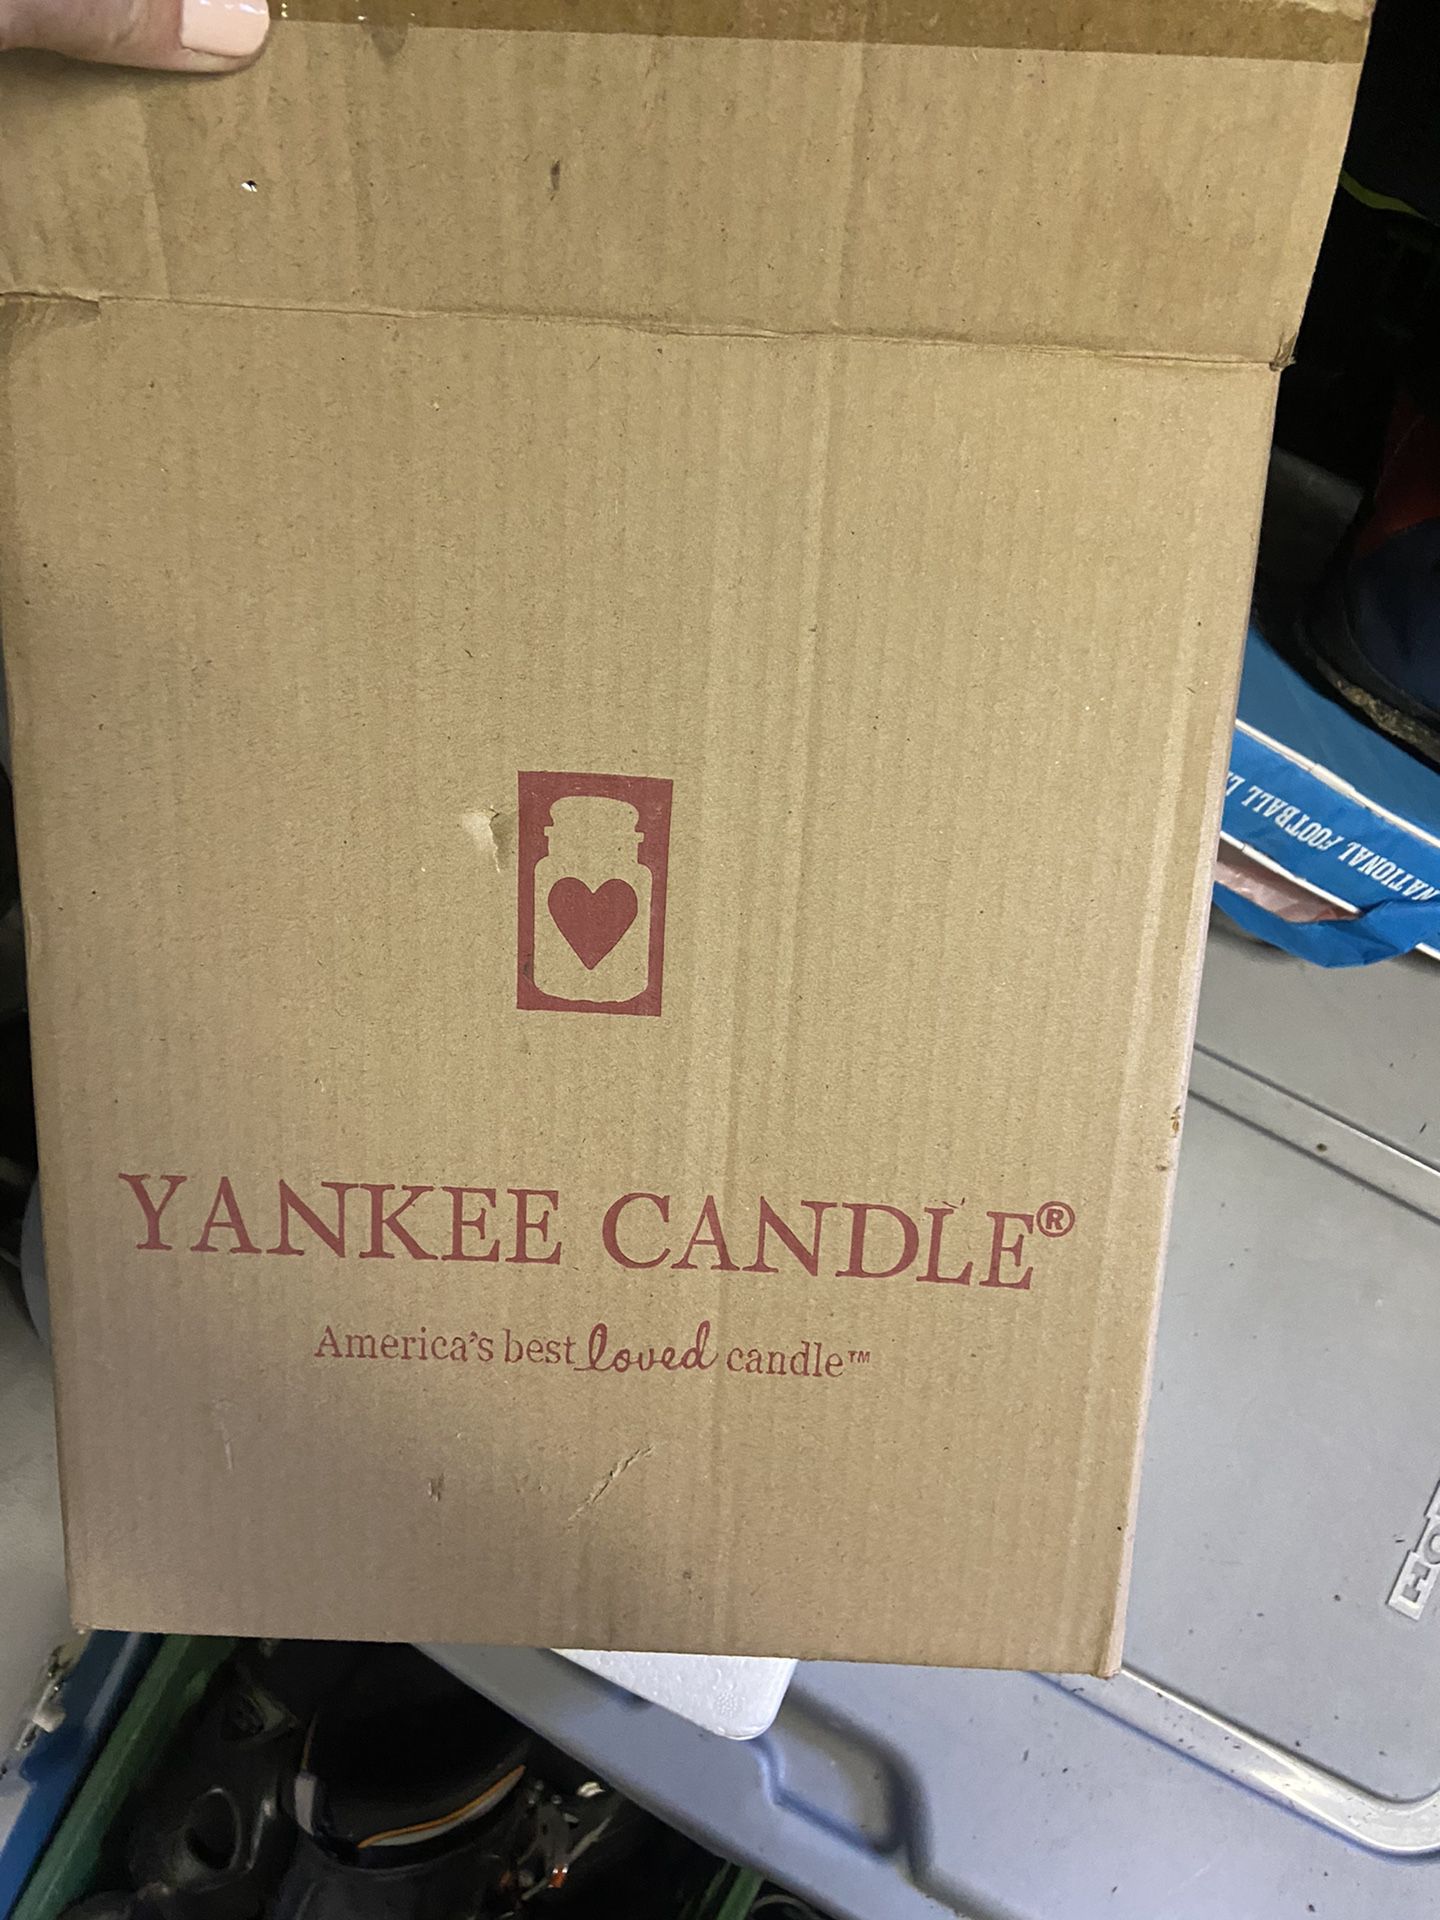 Yankee candle cylinder set never used